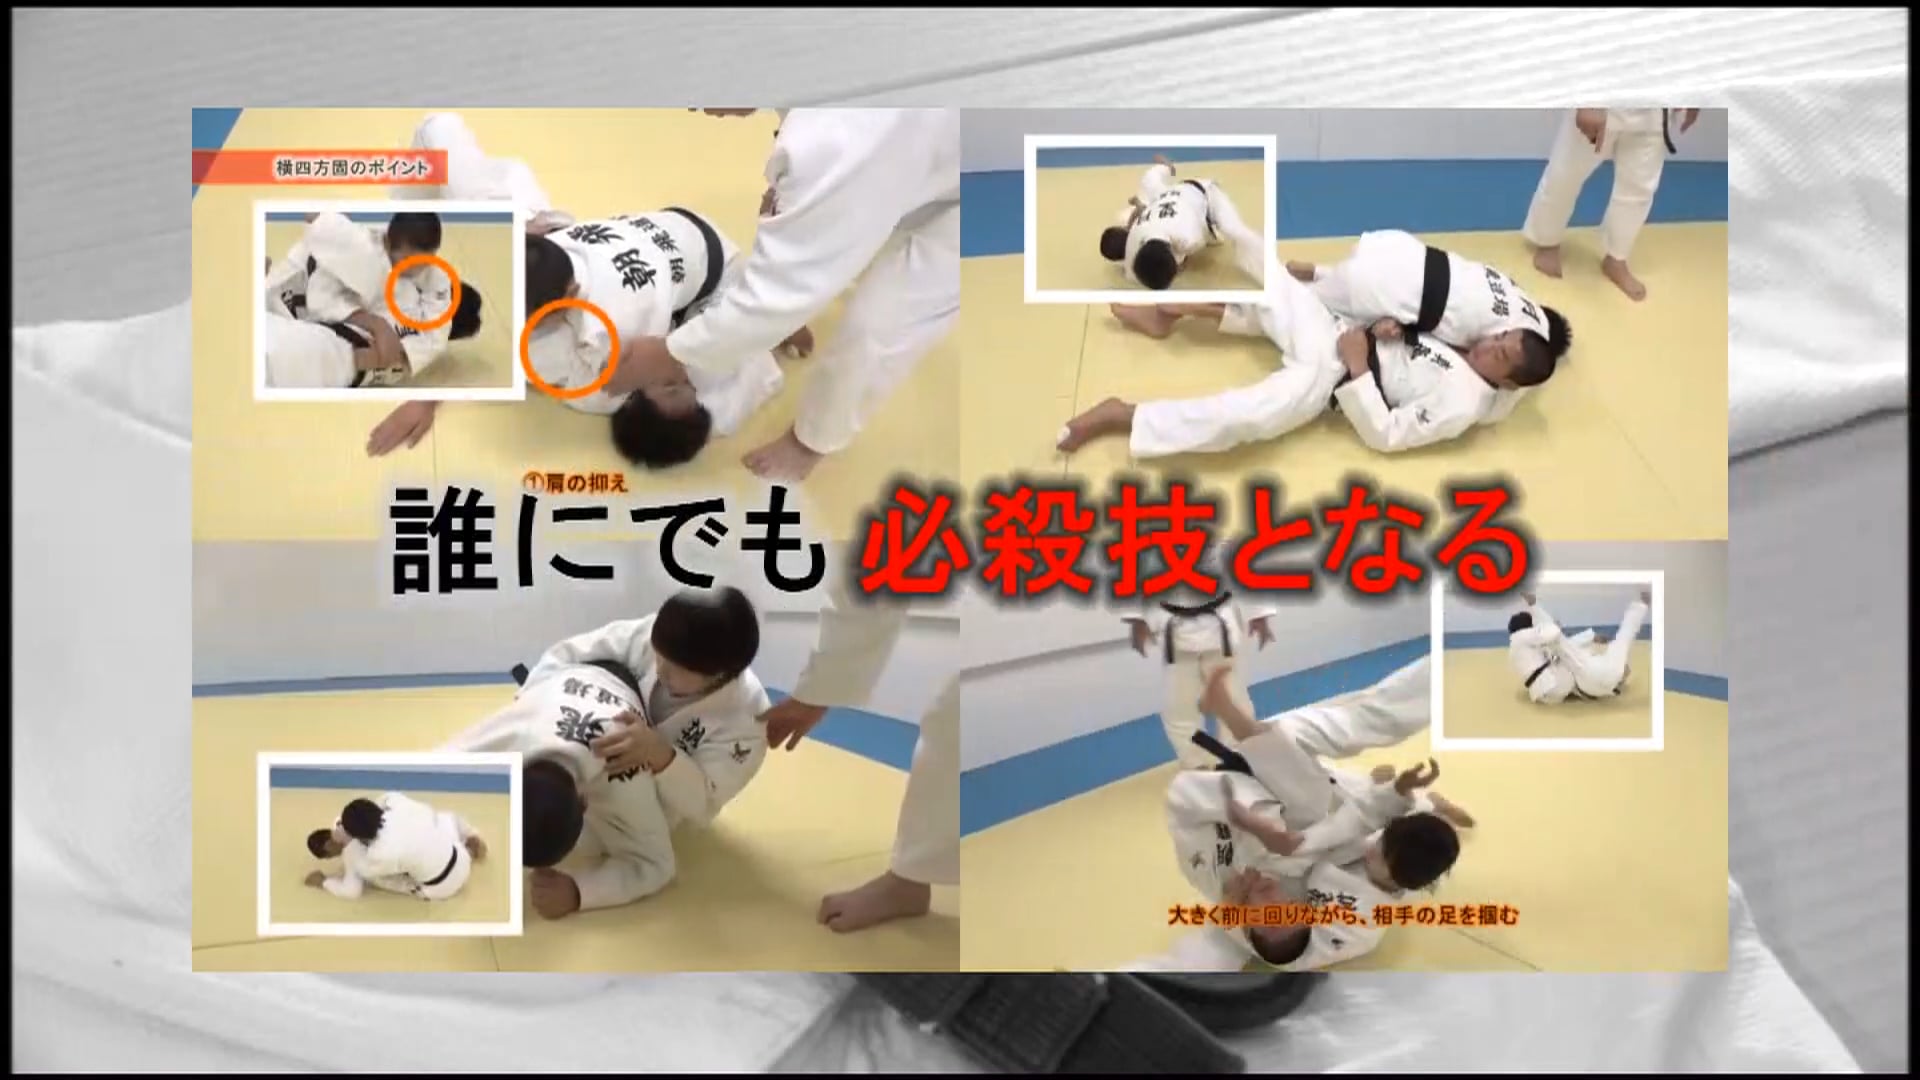 Watch Win with Ne-waza! 21 Ippon-winning judo techniques! Online Vimeo On Demand on Vimeo